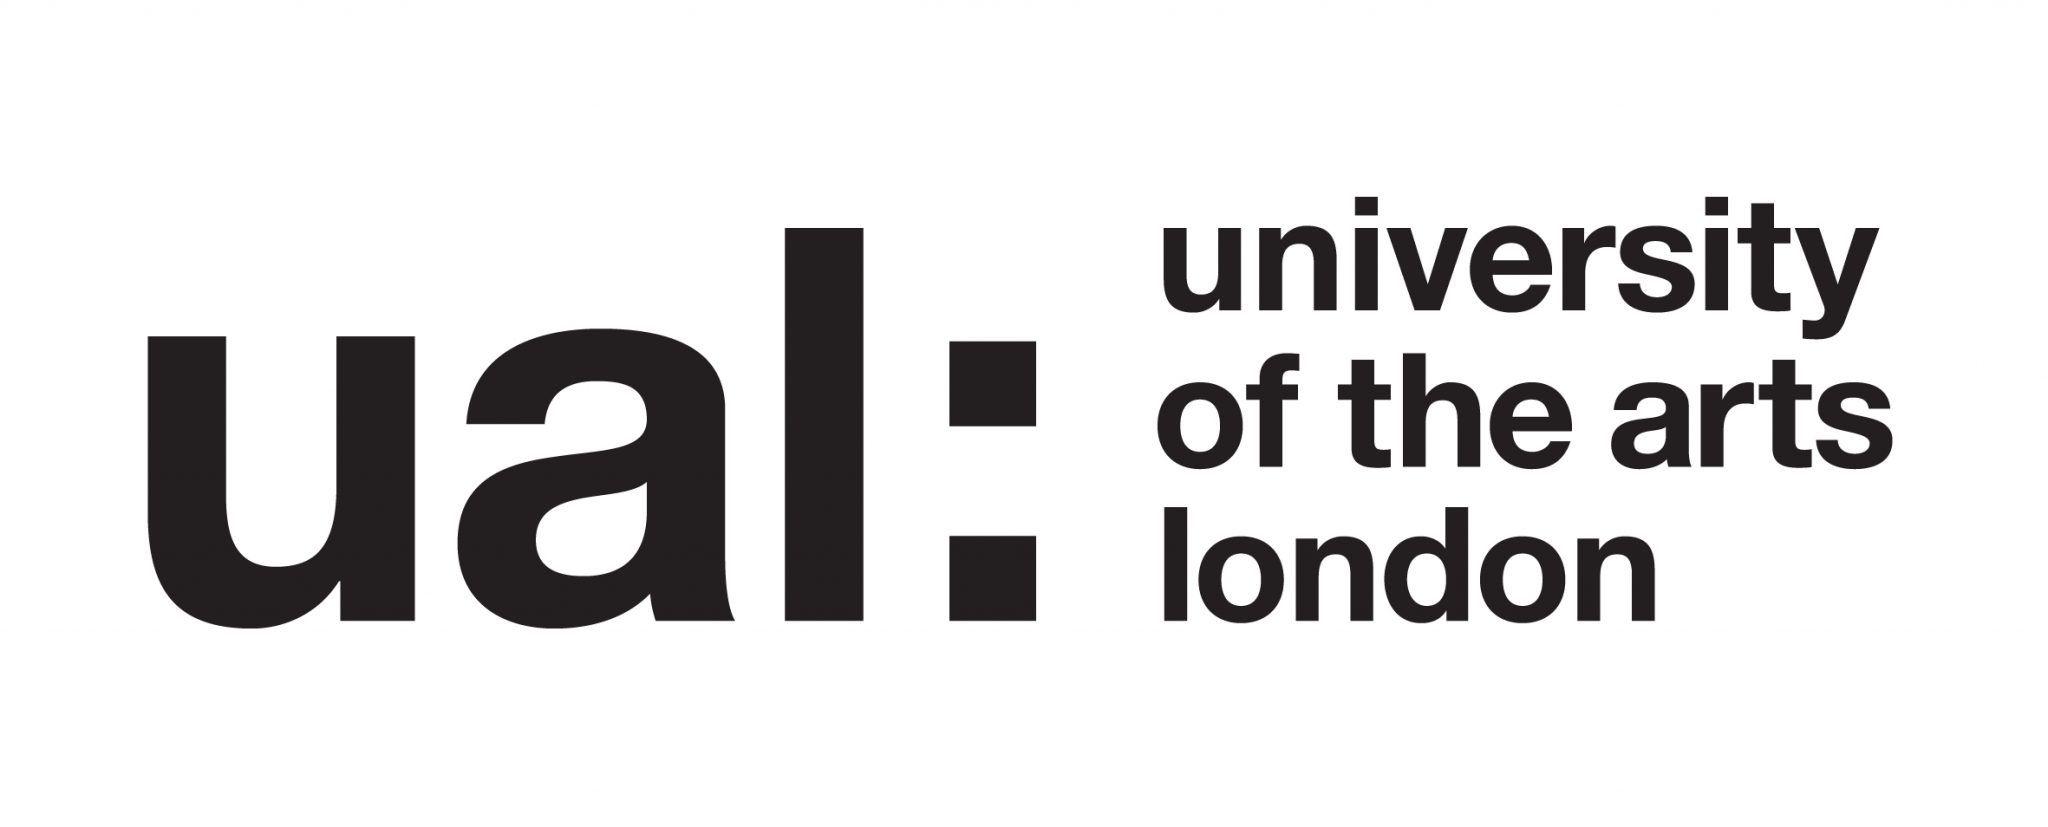 Ual Logo - UAL LOGO